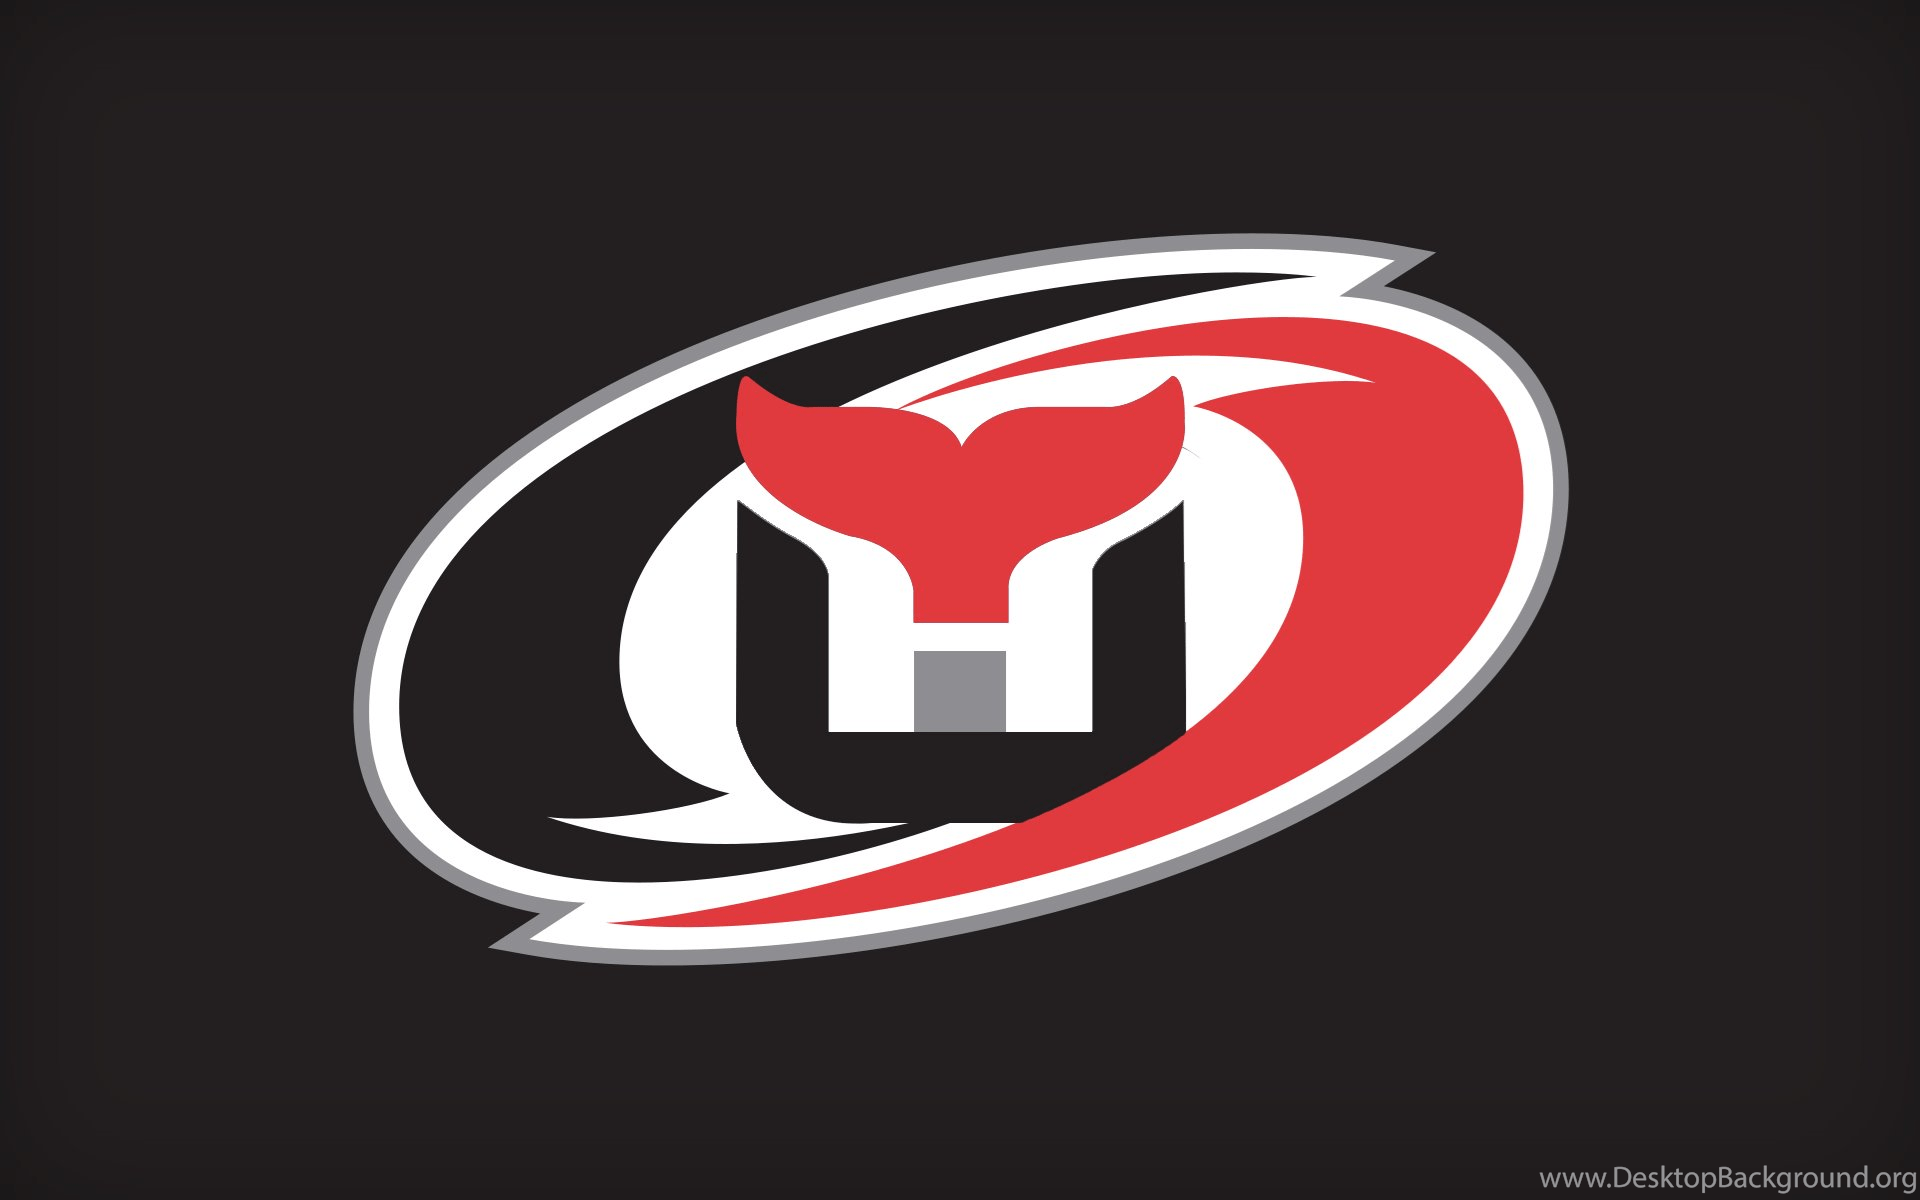 Original 10 NHL Teams Logo - BarDown: Some Of These NHL Team Logo Mashups Are Better Than The ...